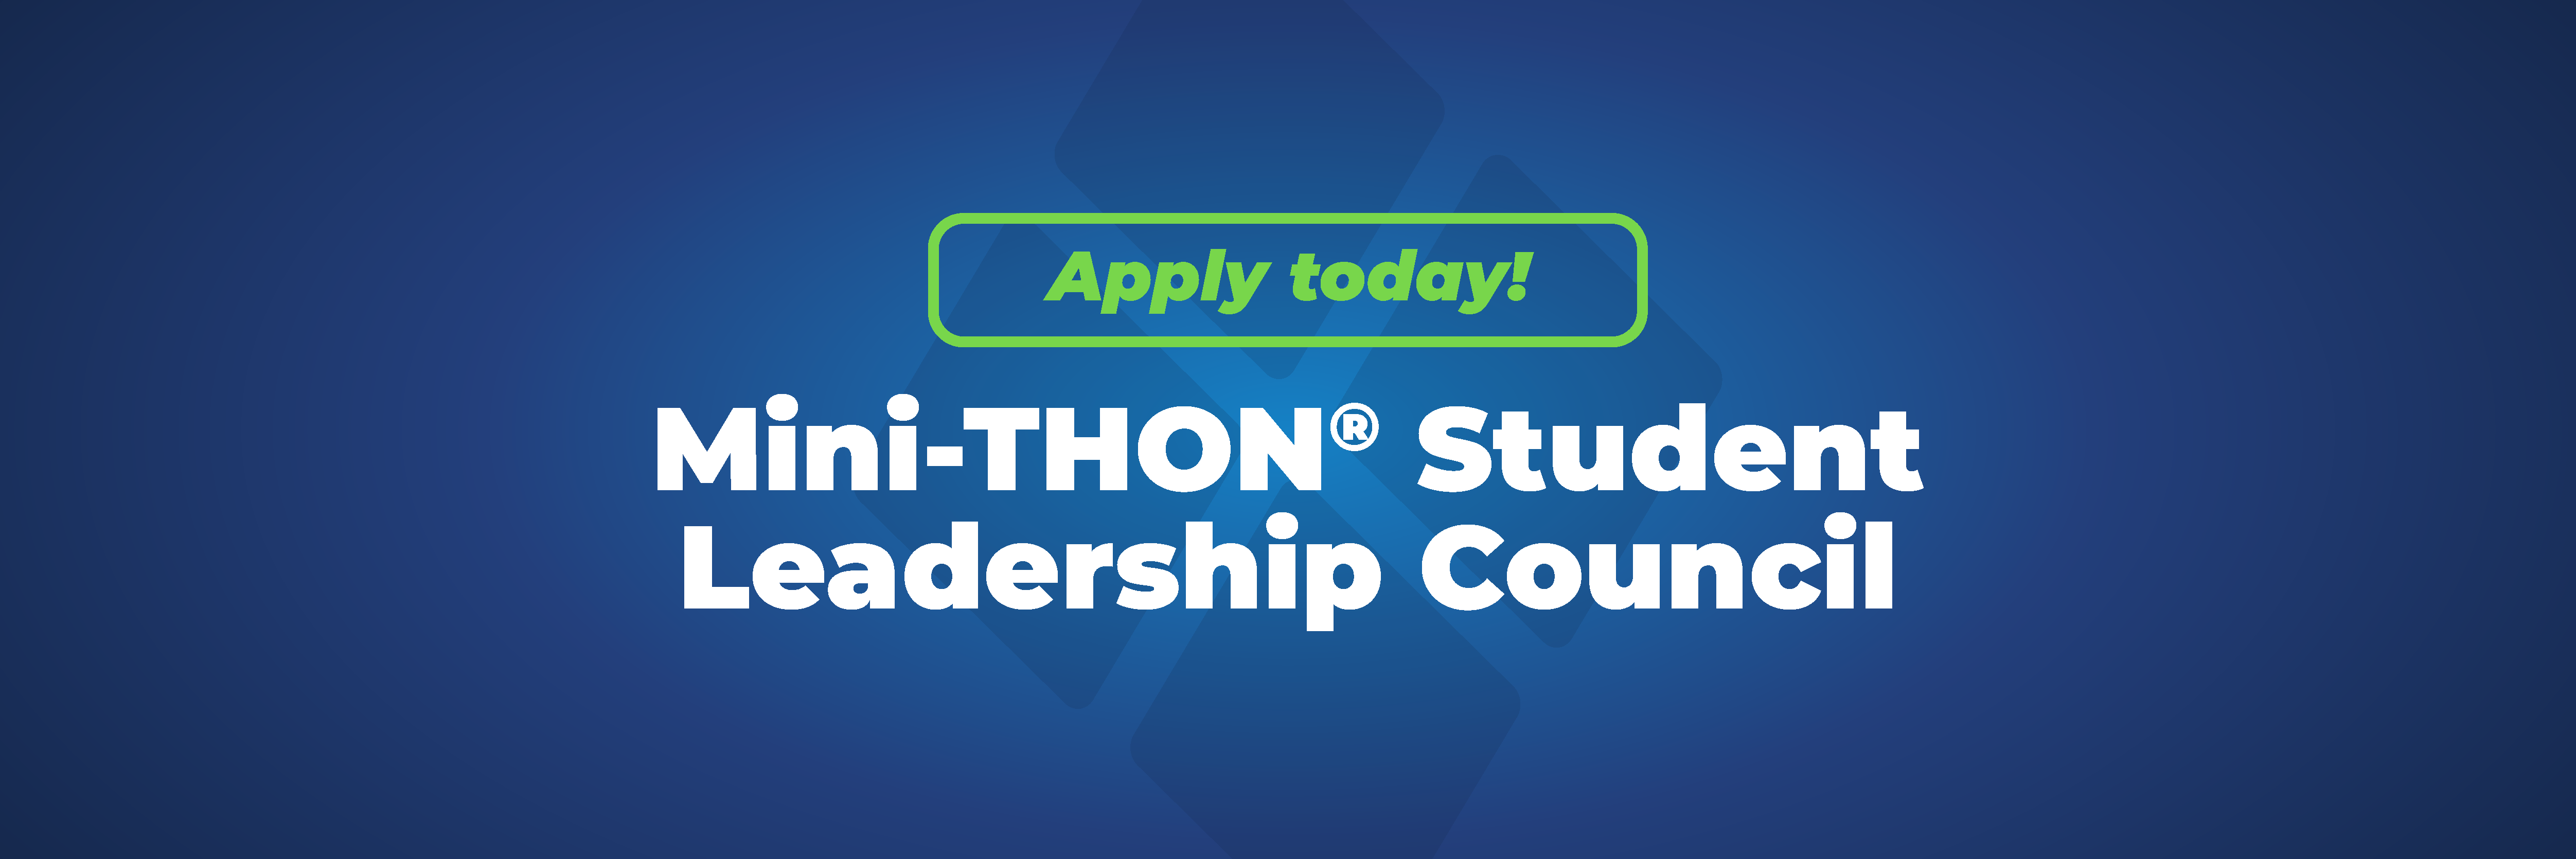 MiniTHON® Student Leadership Council Applications Due June 11 FTK Nation